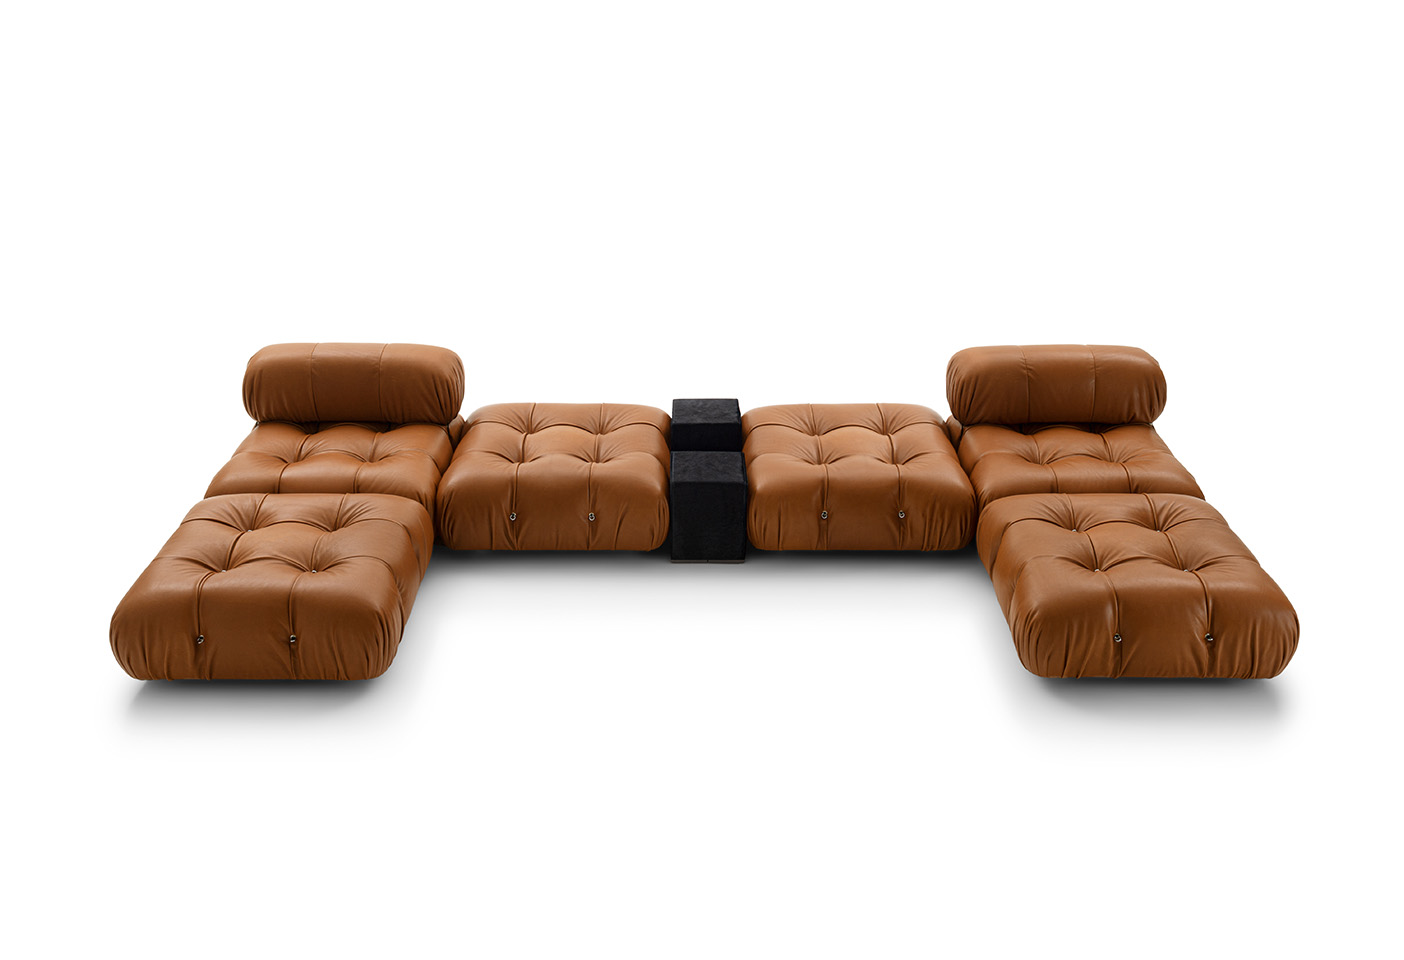 The Camaleonda sofa by Mario Bellini for B&B Italia has established itself as an icon of furniture design. Photo c/o B&B Italia. 